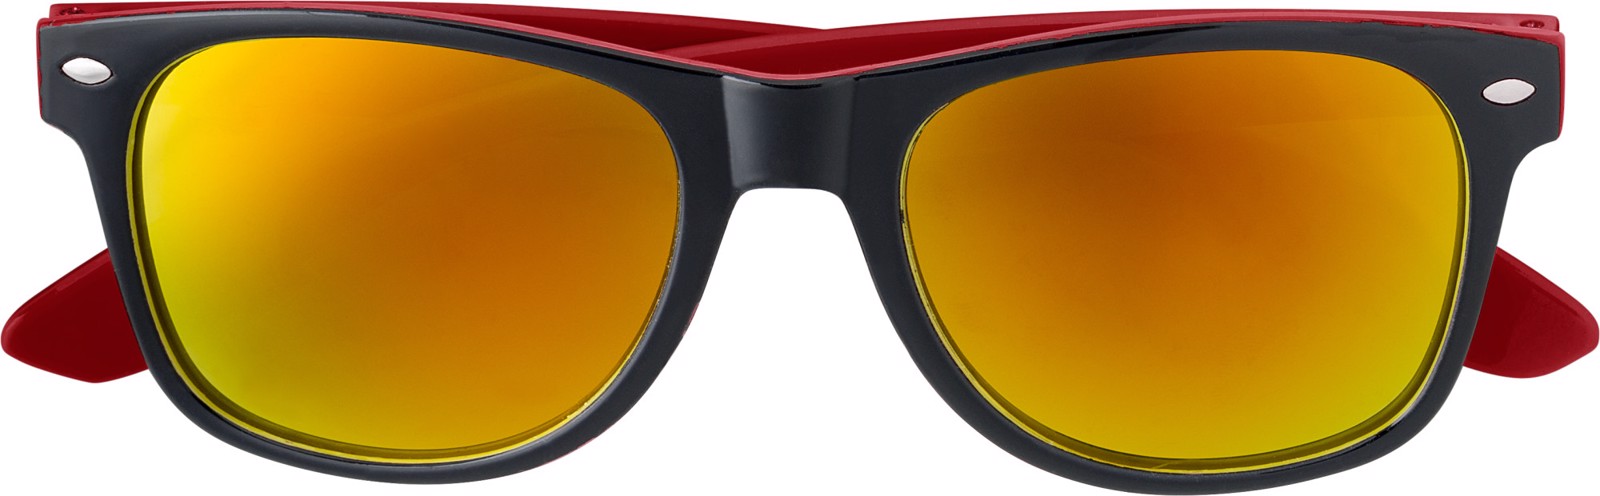 Acrylic sunglasses - Red